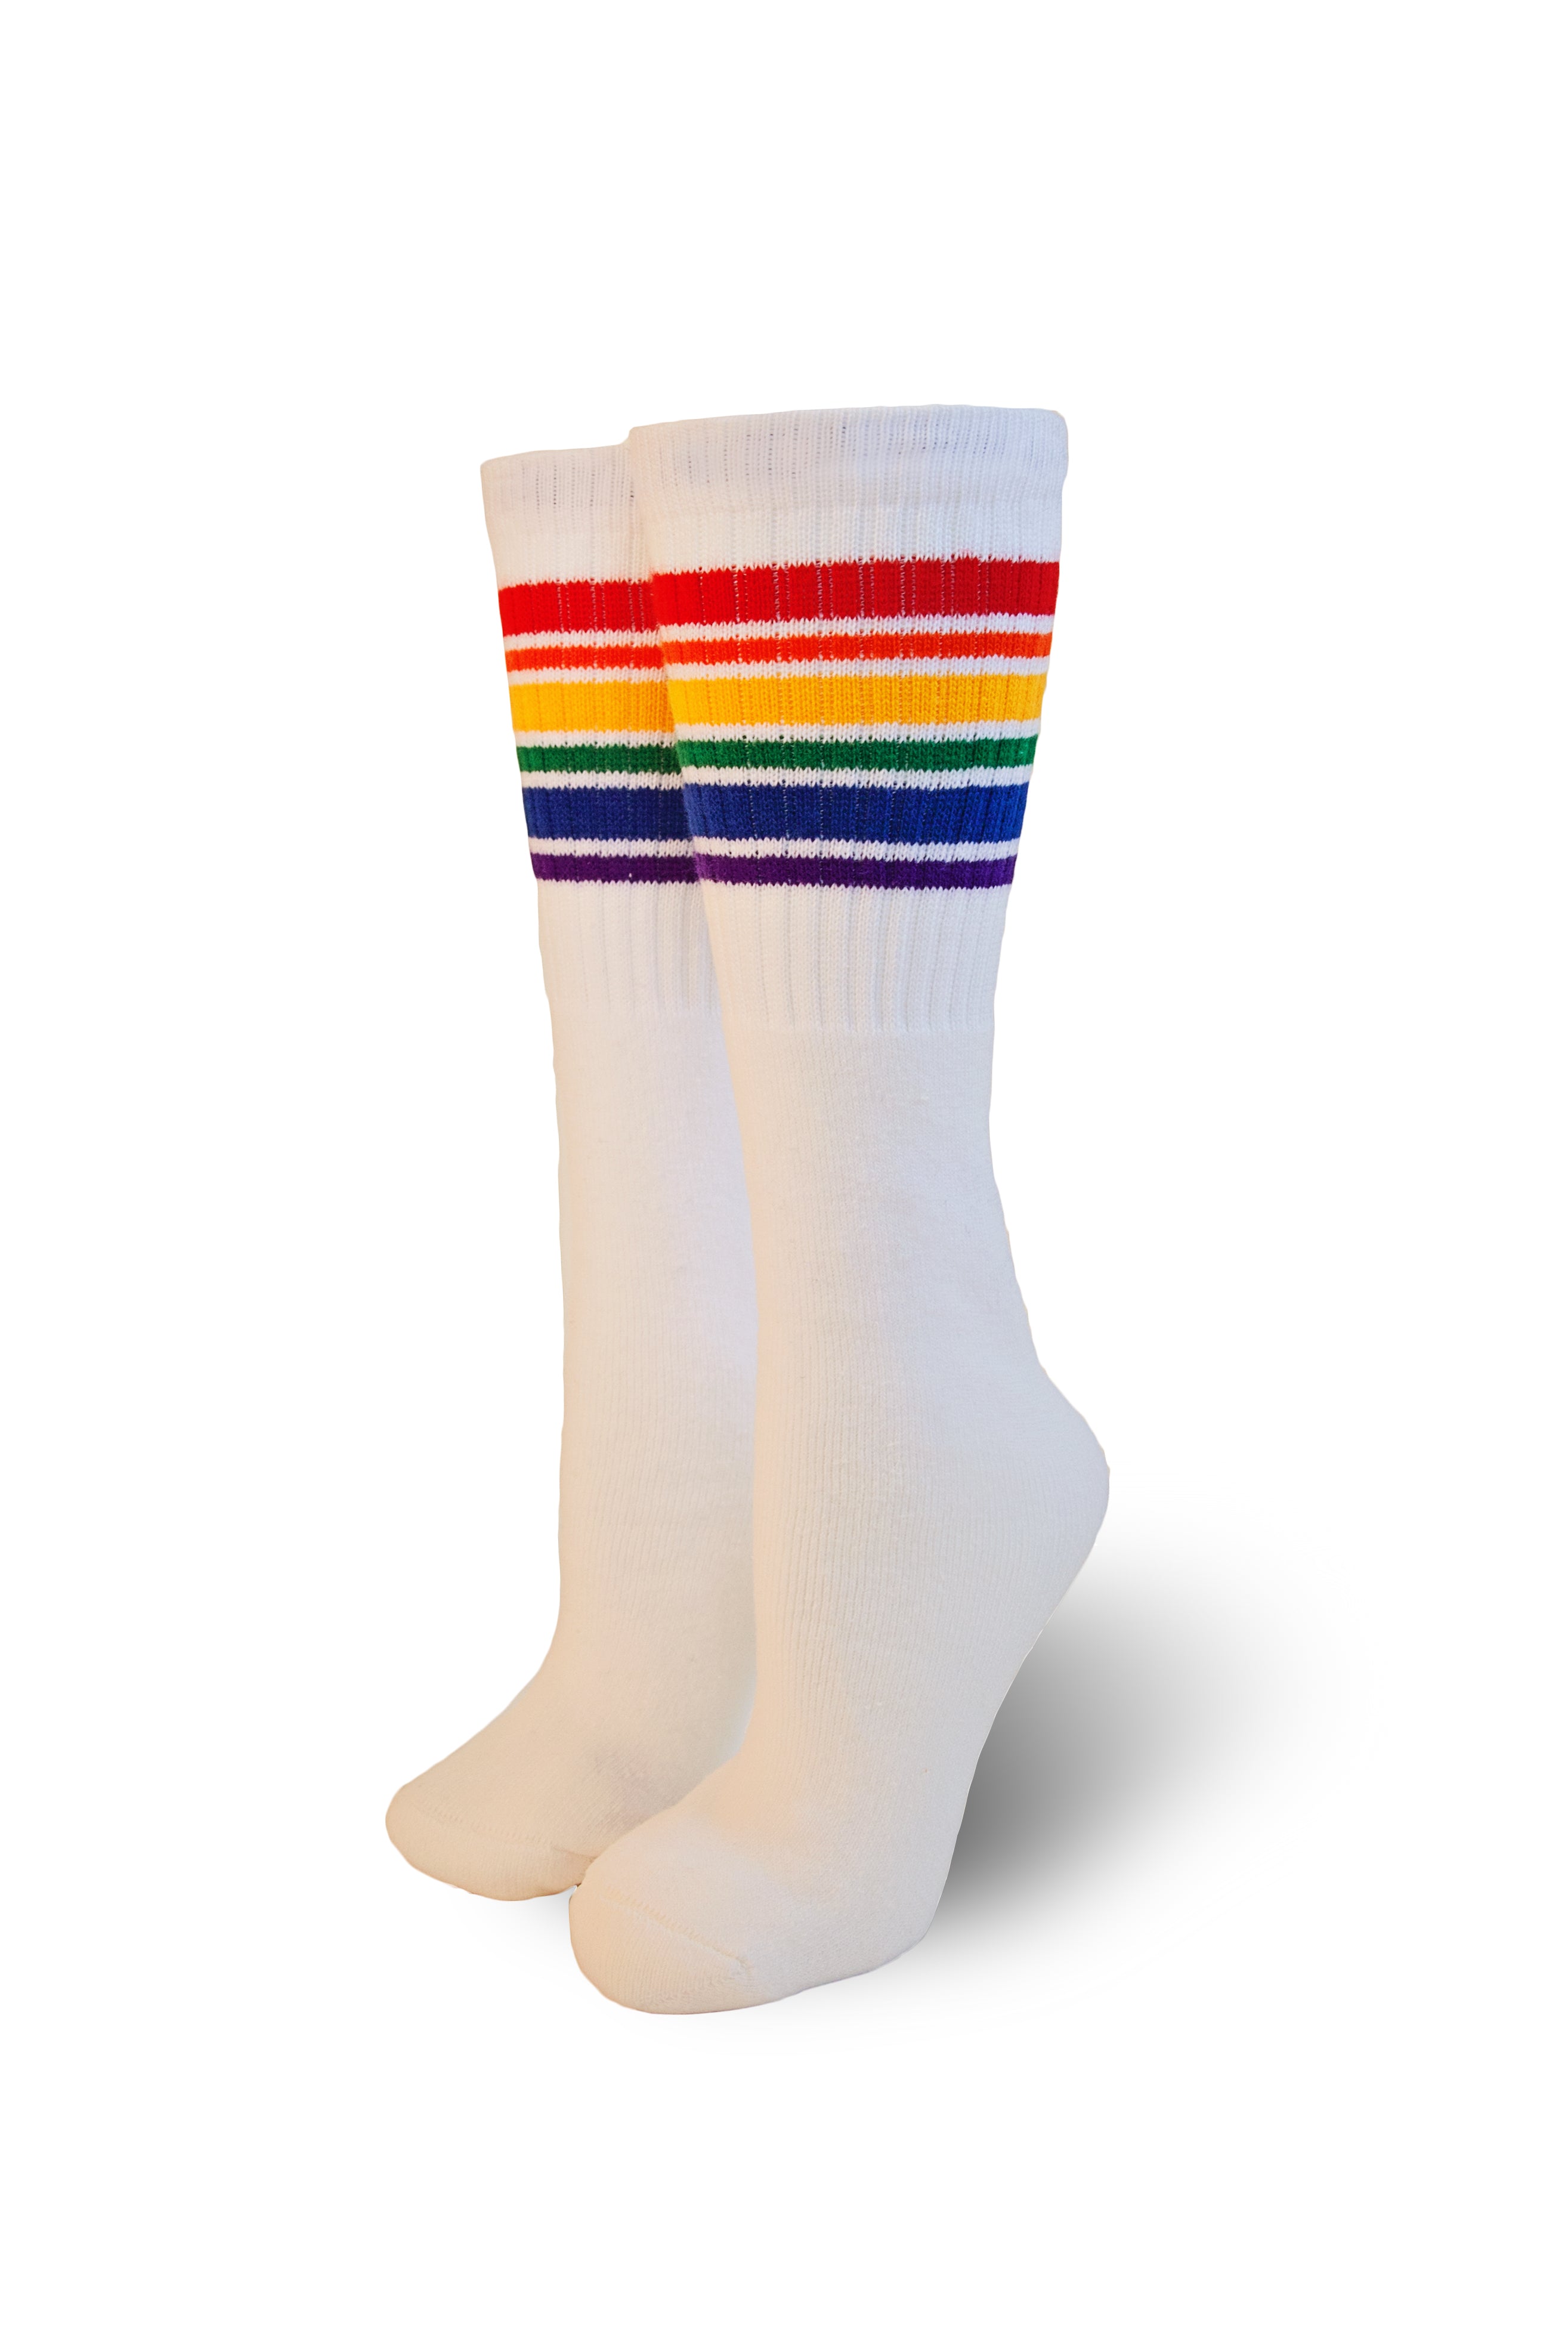 Pride Socks 22in white tubes - Fearless